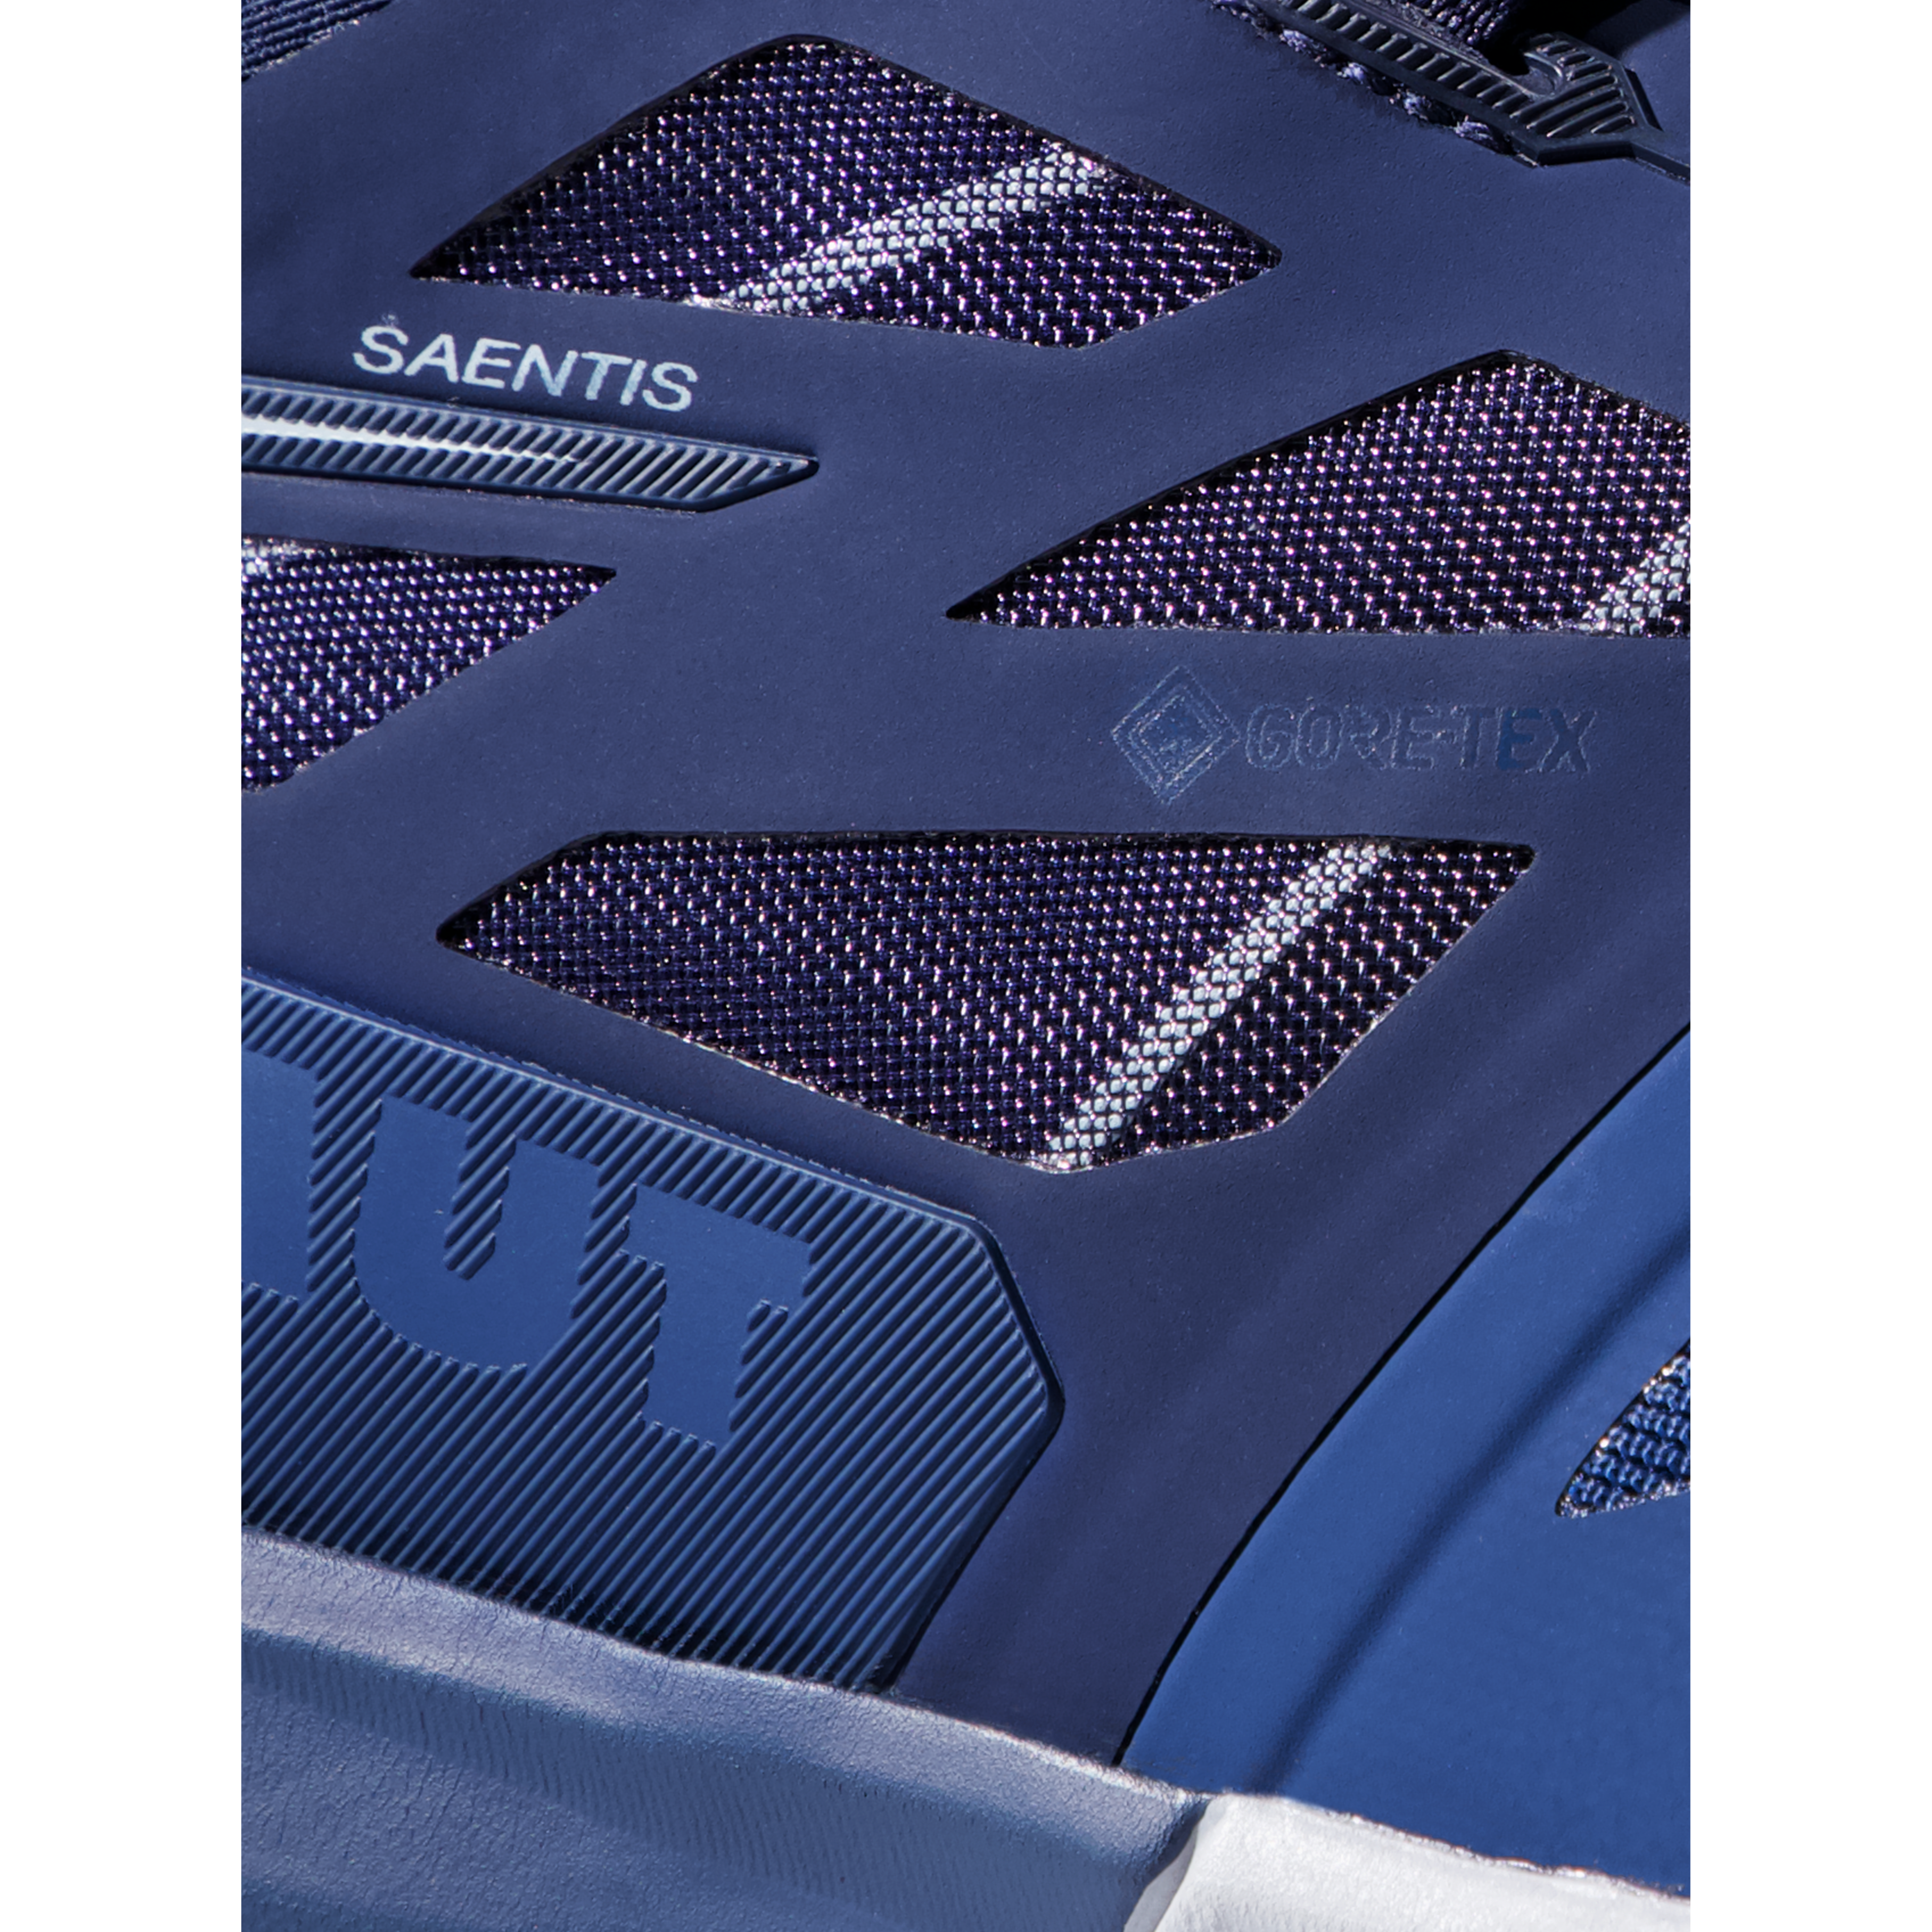 Saentis Low GTX Men product image